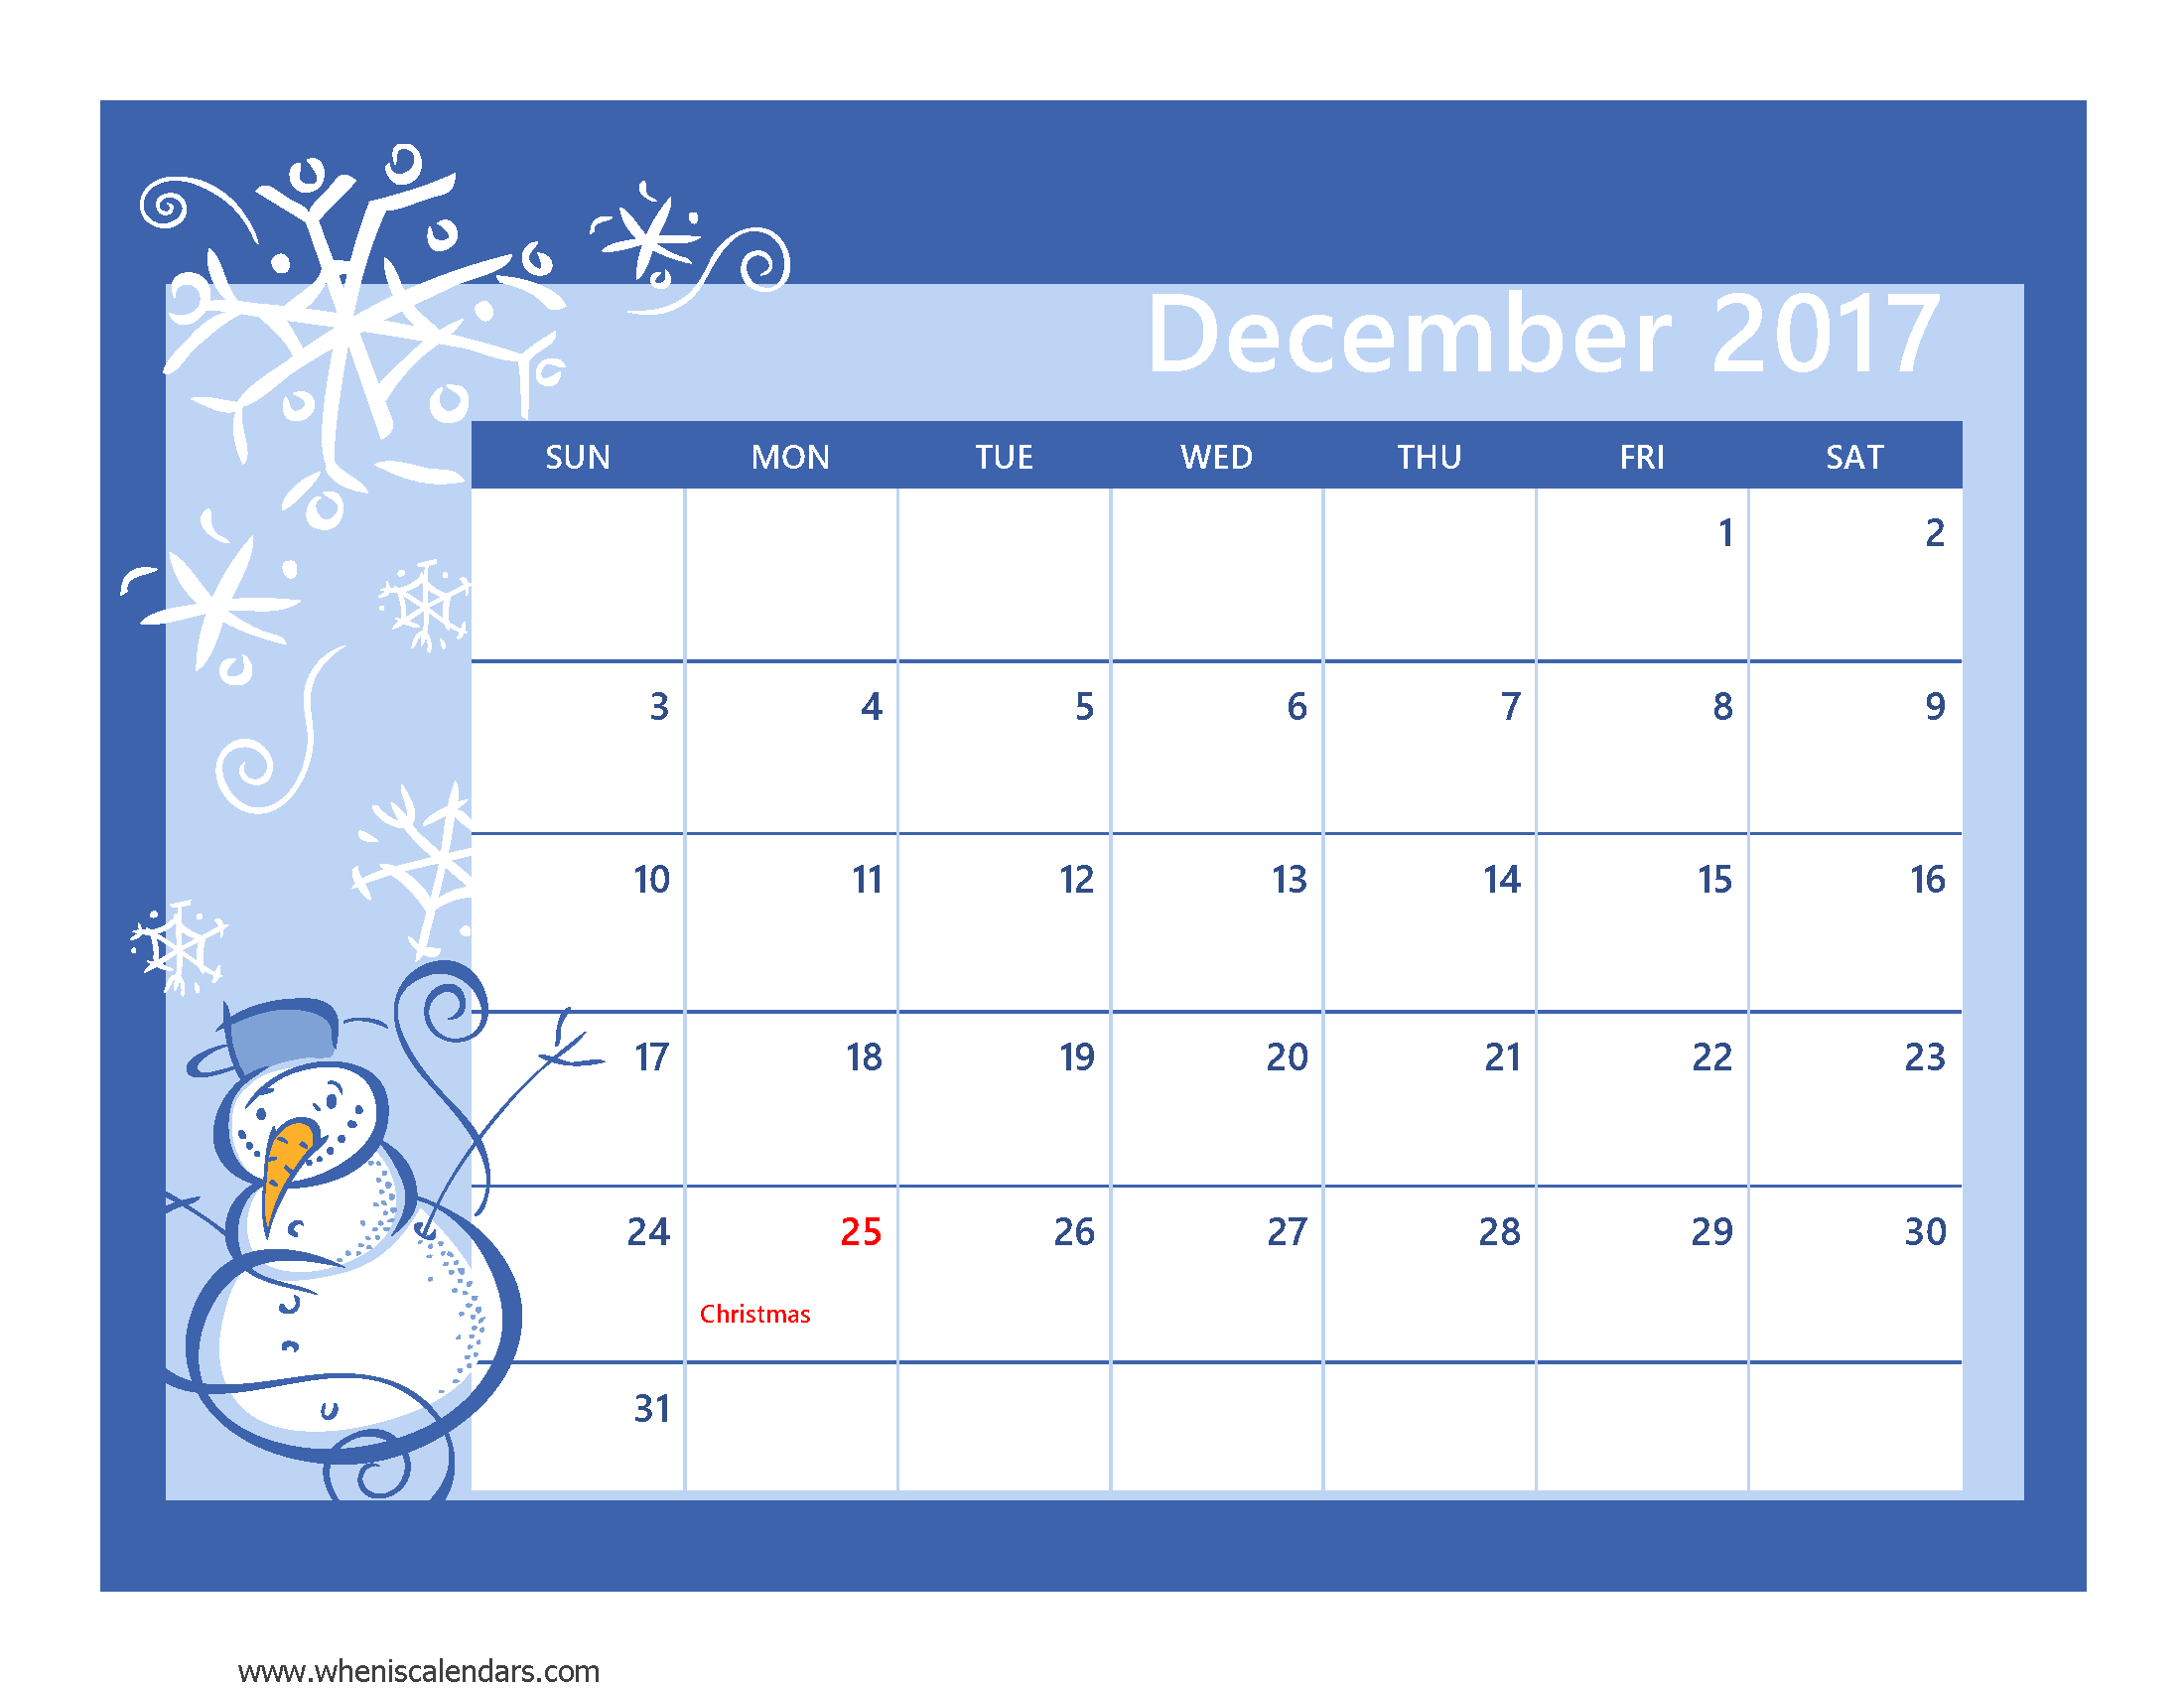 December 2017 Calendar Printable With Holidays December 2017 